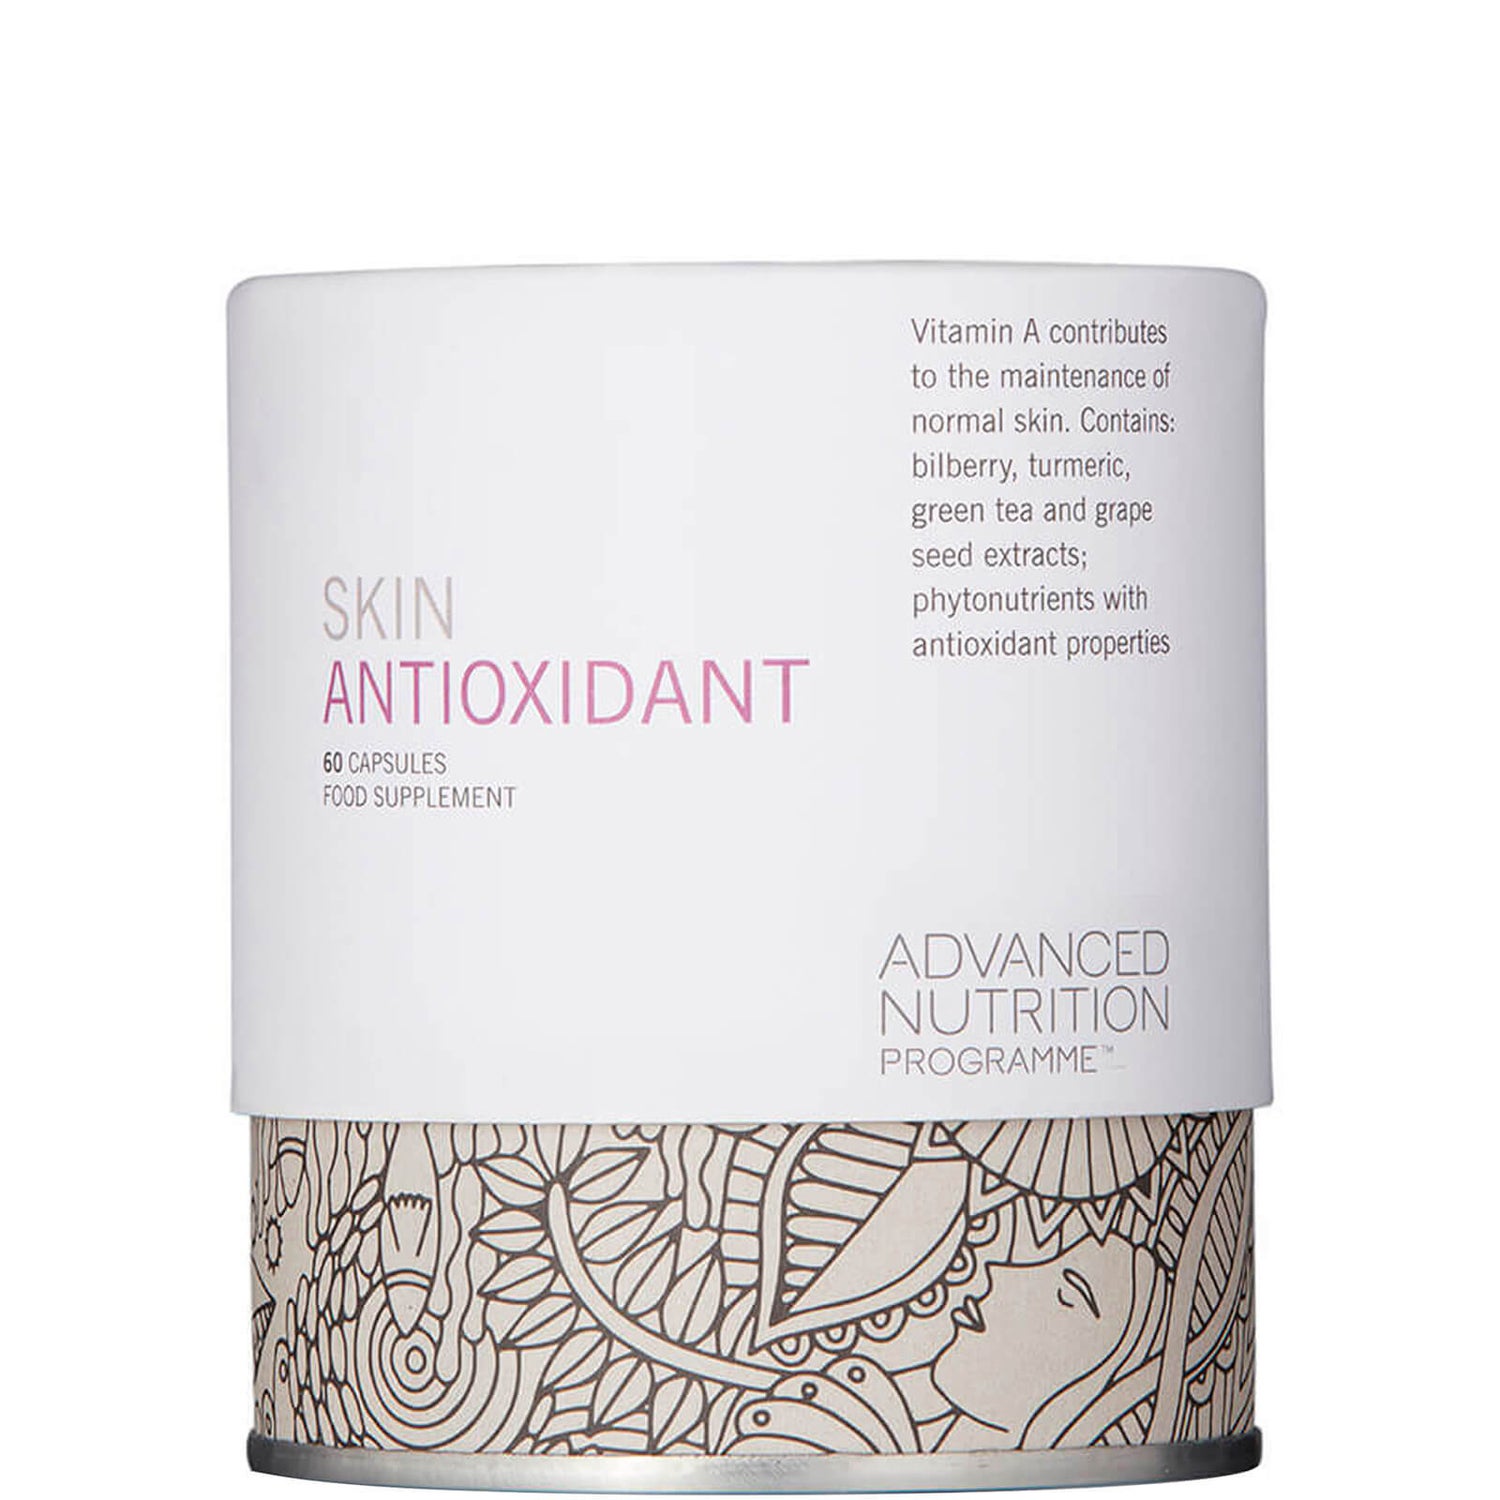 Advanced Nutrition Programme™ Skin Antioxidant 60 Capsules